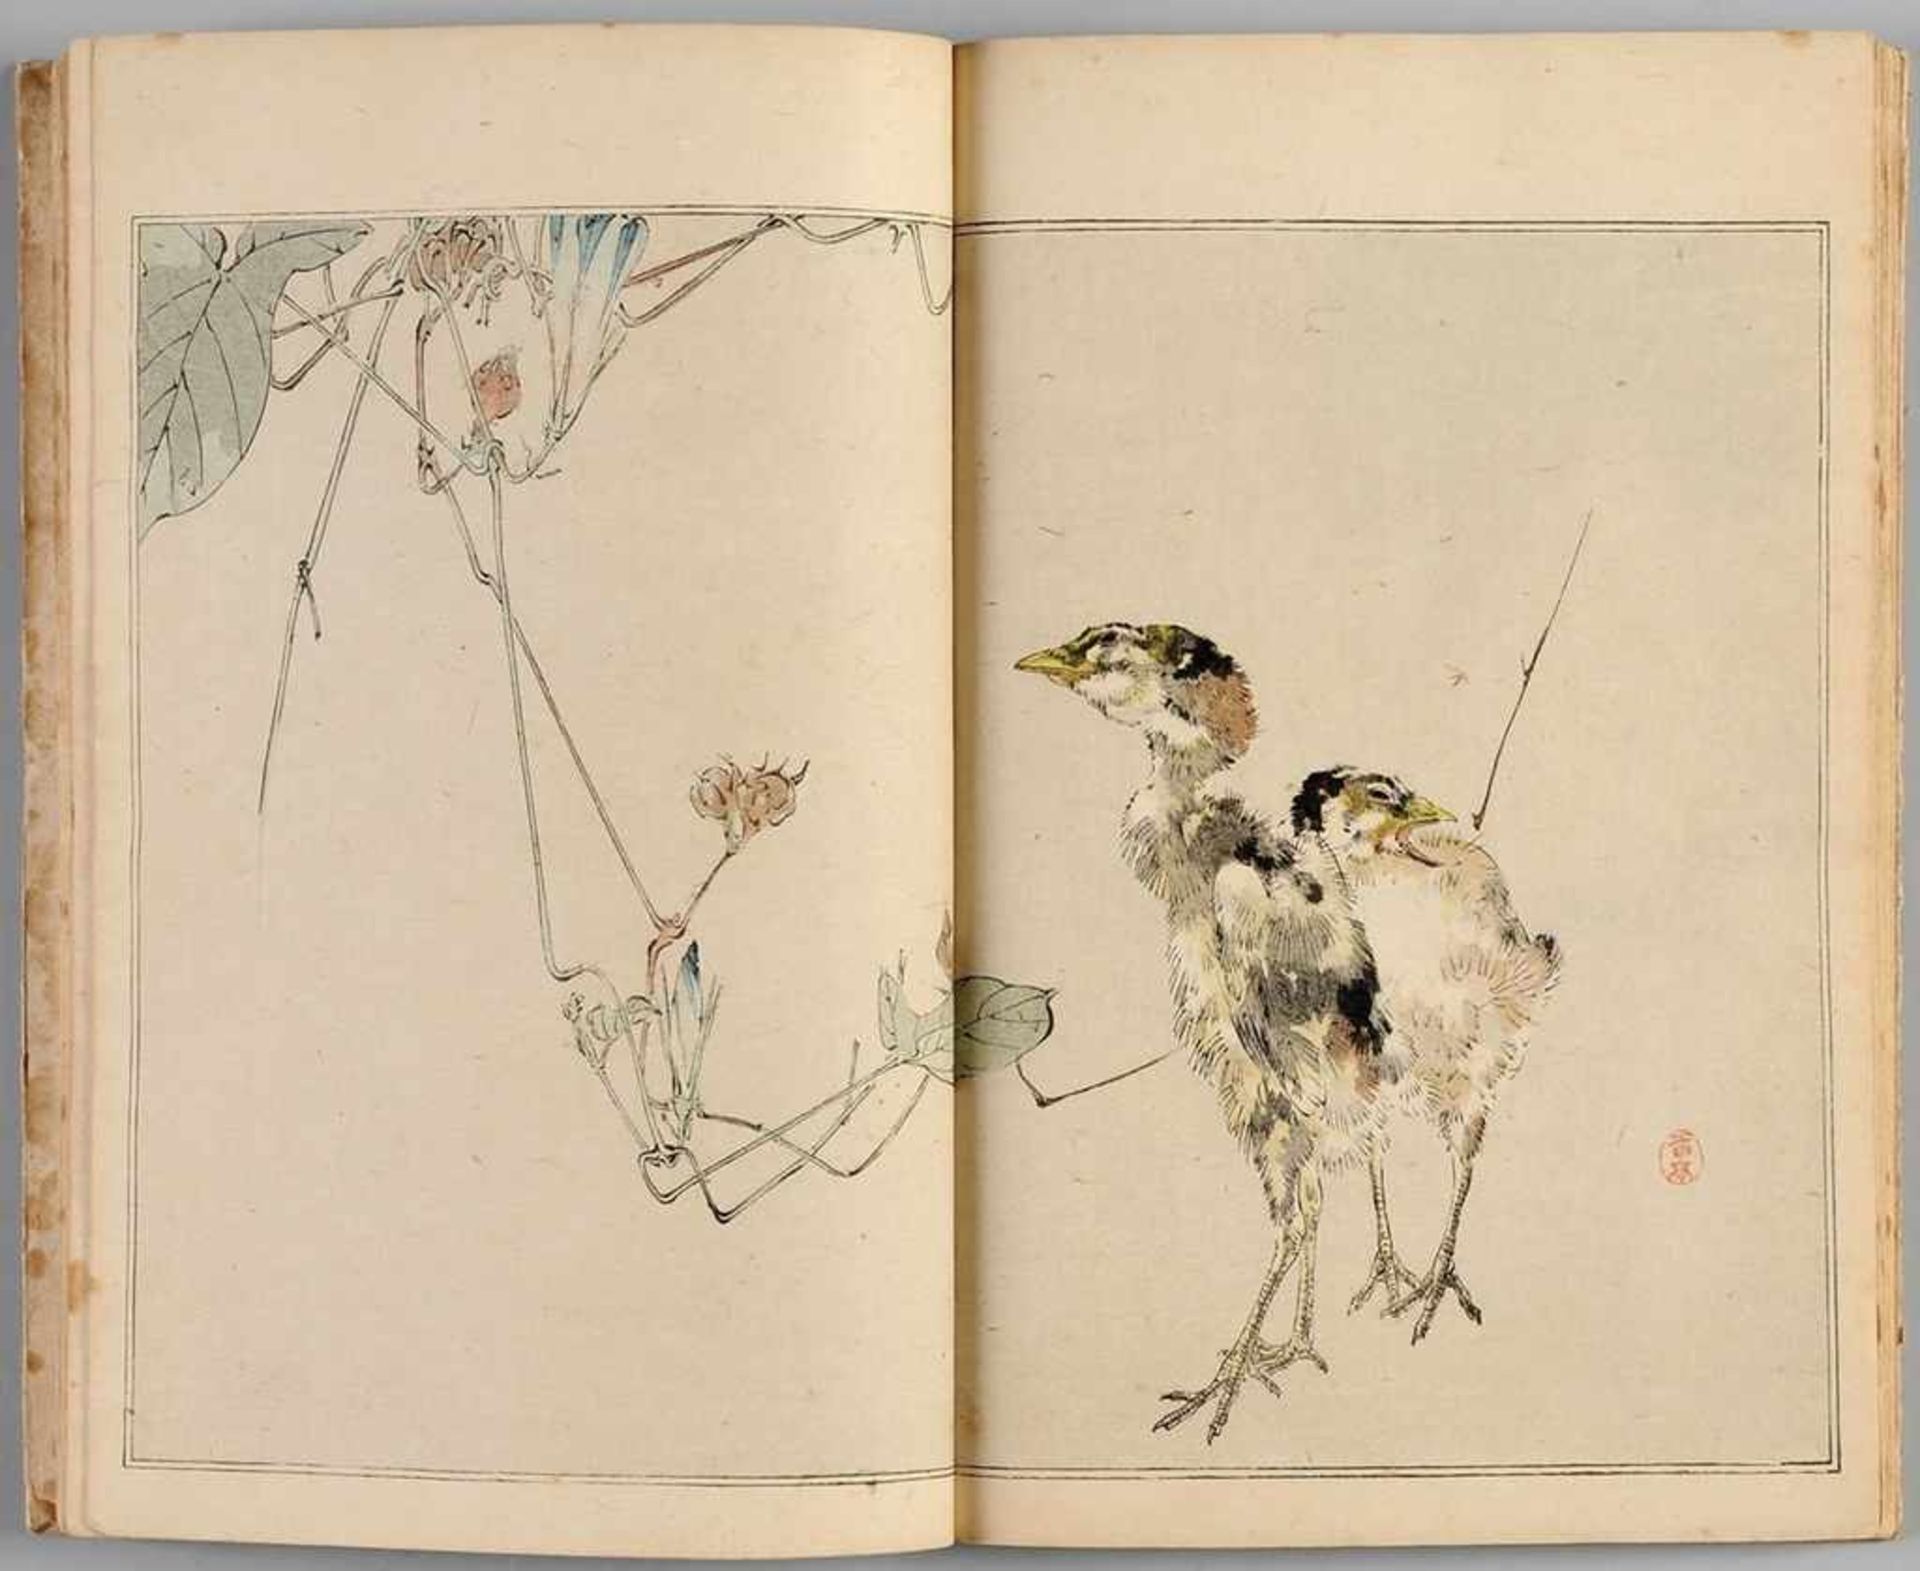 Watanabe, Seitei(auch Watanabe, Shotei, Edo 1851 - 1918) Kolorierter Holzschnitt. Bd. 1 des Albums